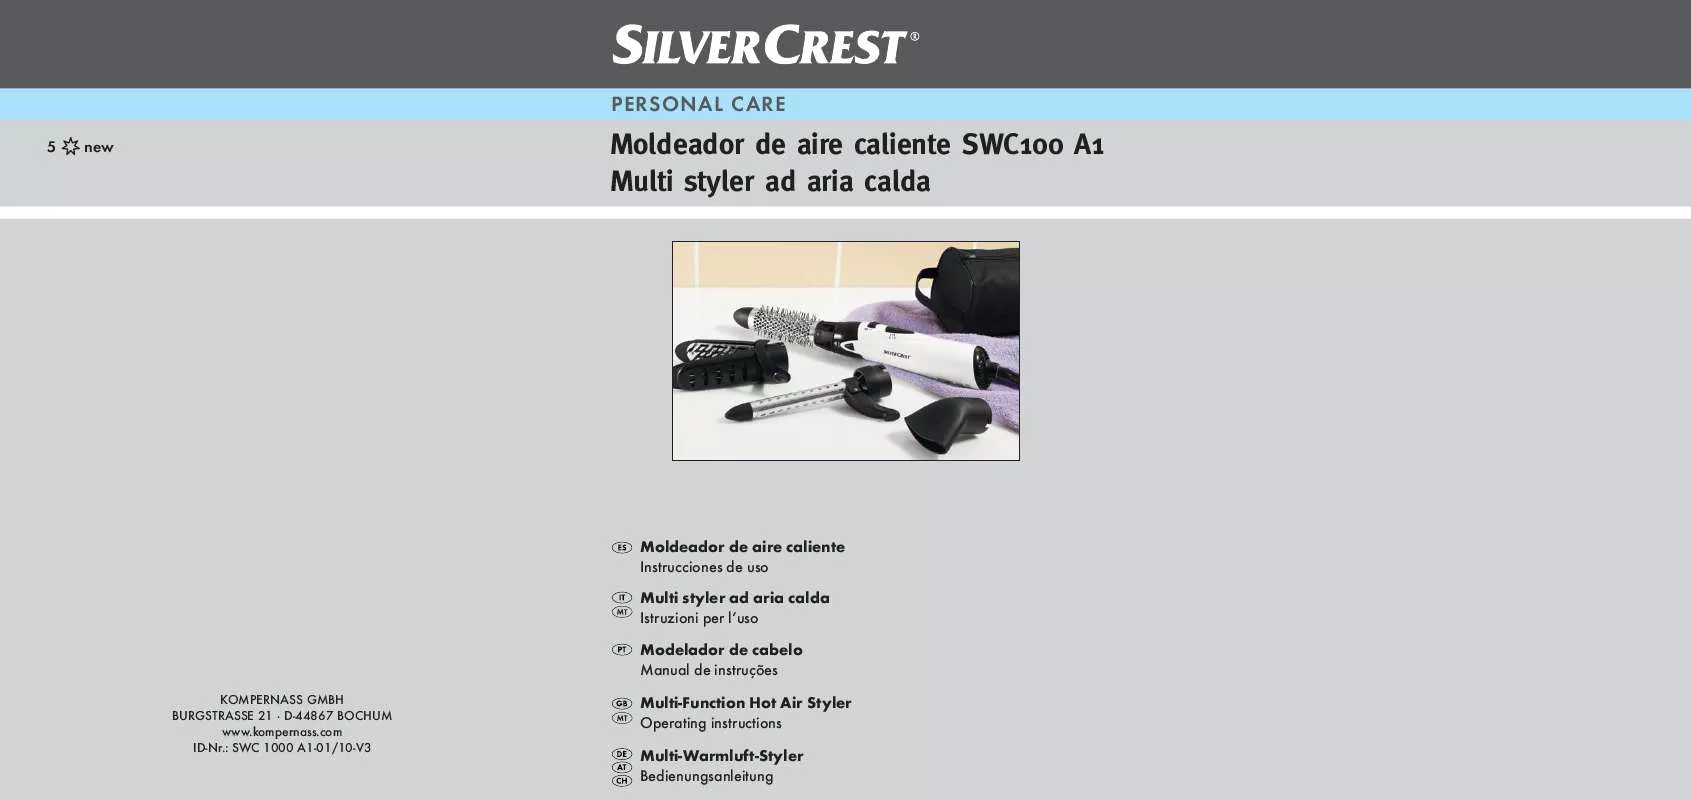 Mode d'emploi SILVERCREST SWC 1000 A1 MULTI-FUNCTION HOT AIR STYLER